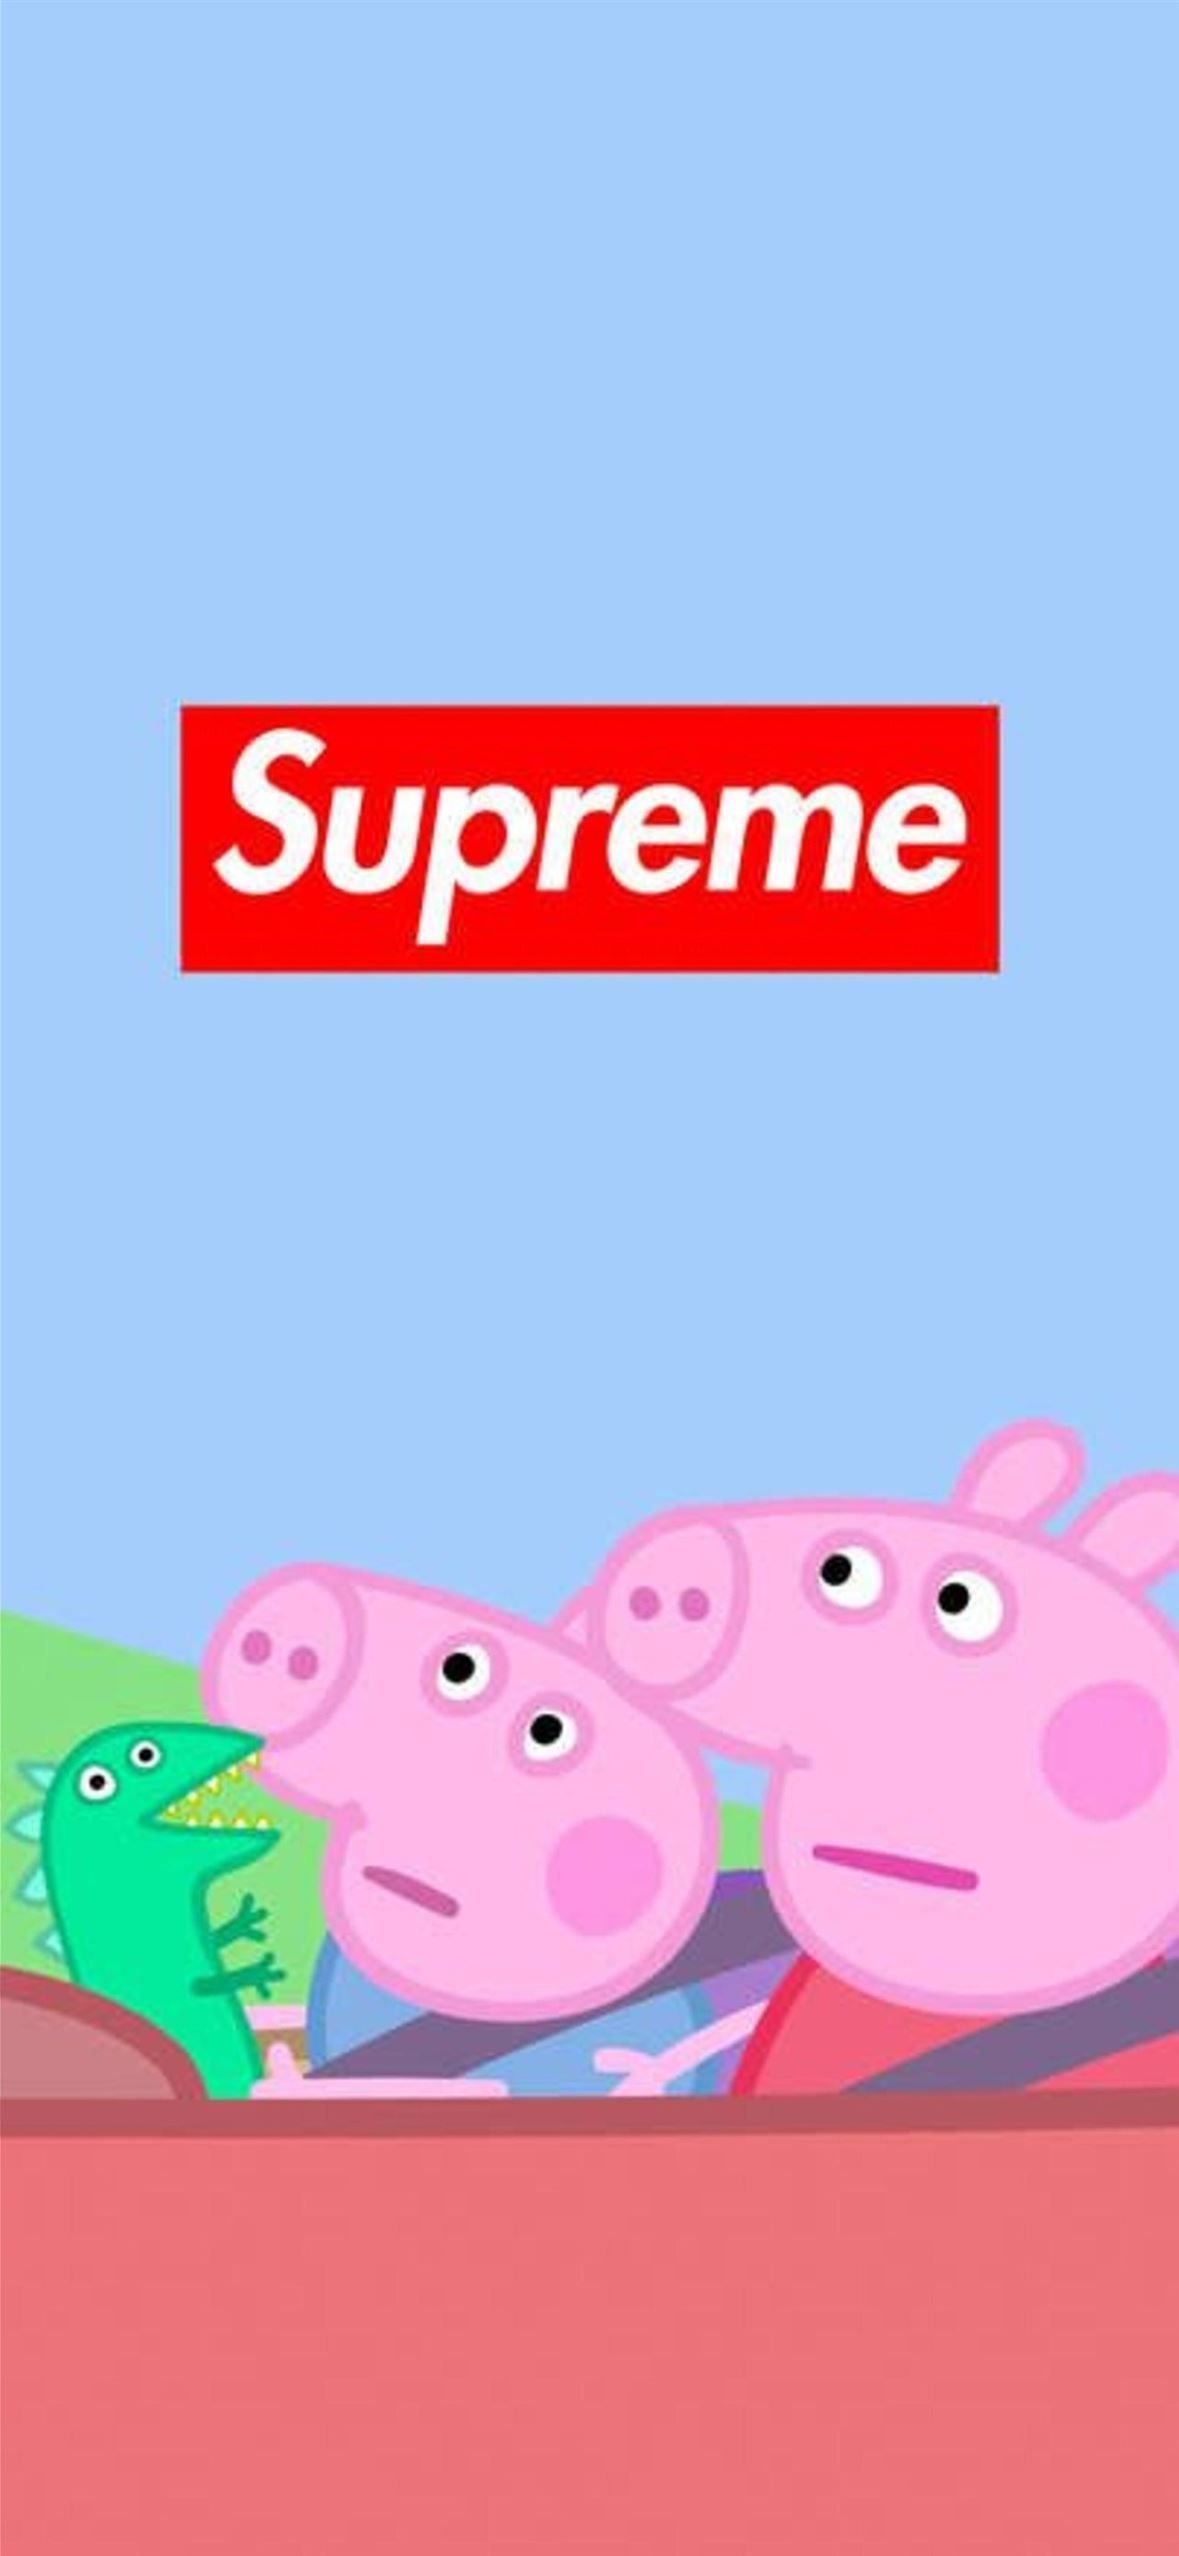 Peppa Pig Supreme KoLPaPer Awesome Free HD iPhone Wallpaper Free Download